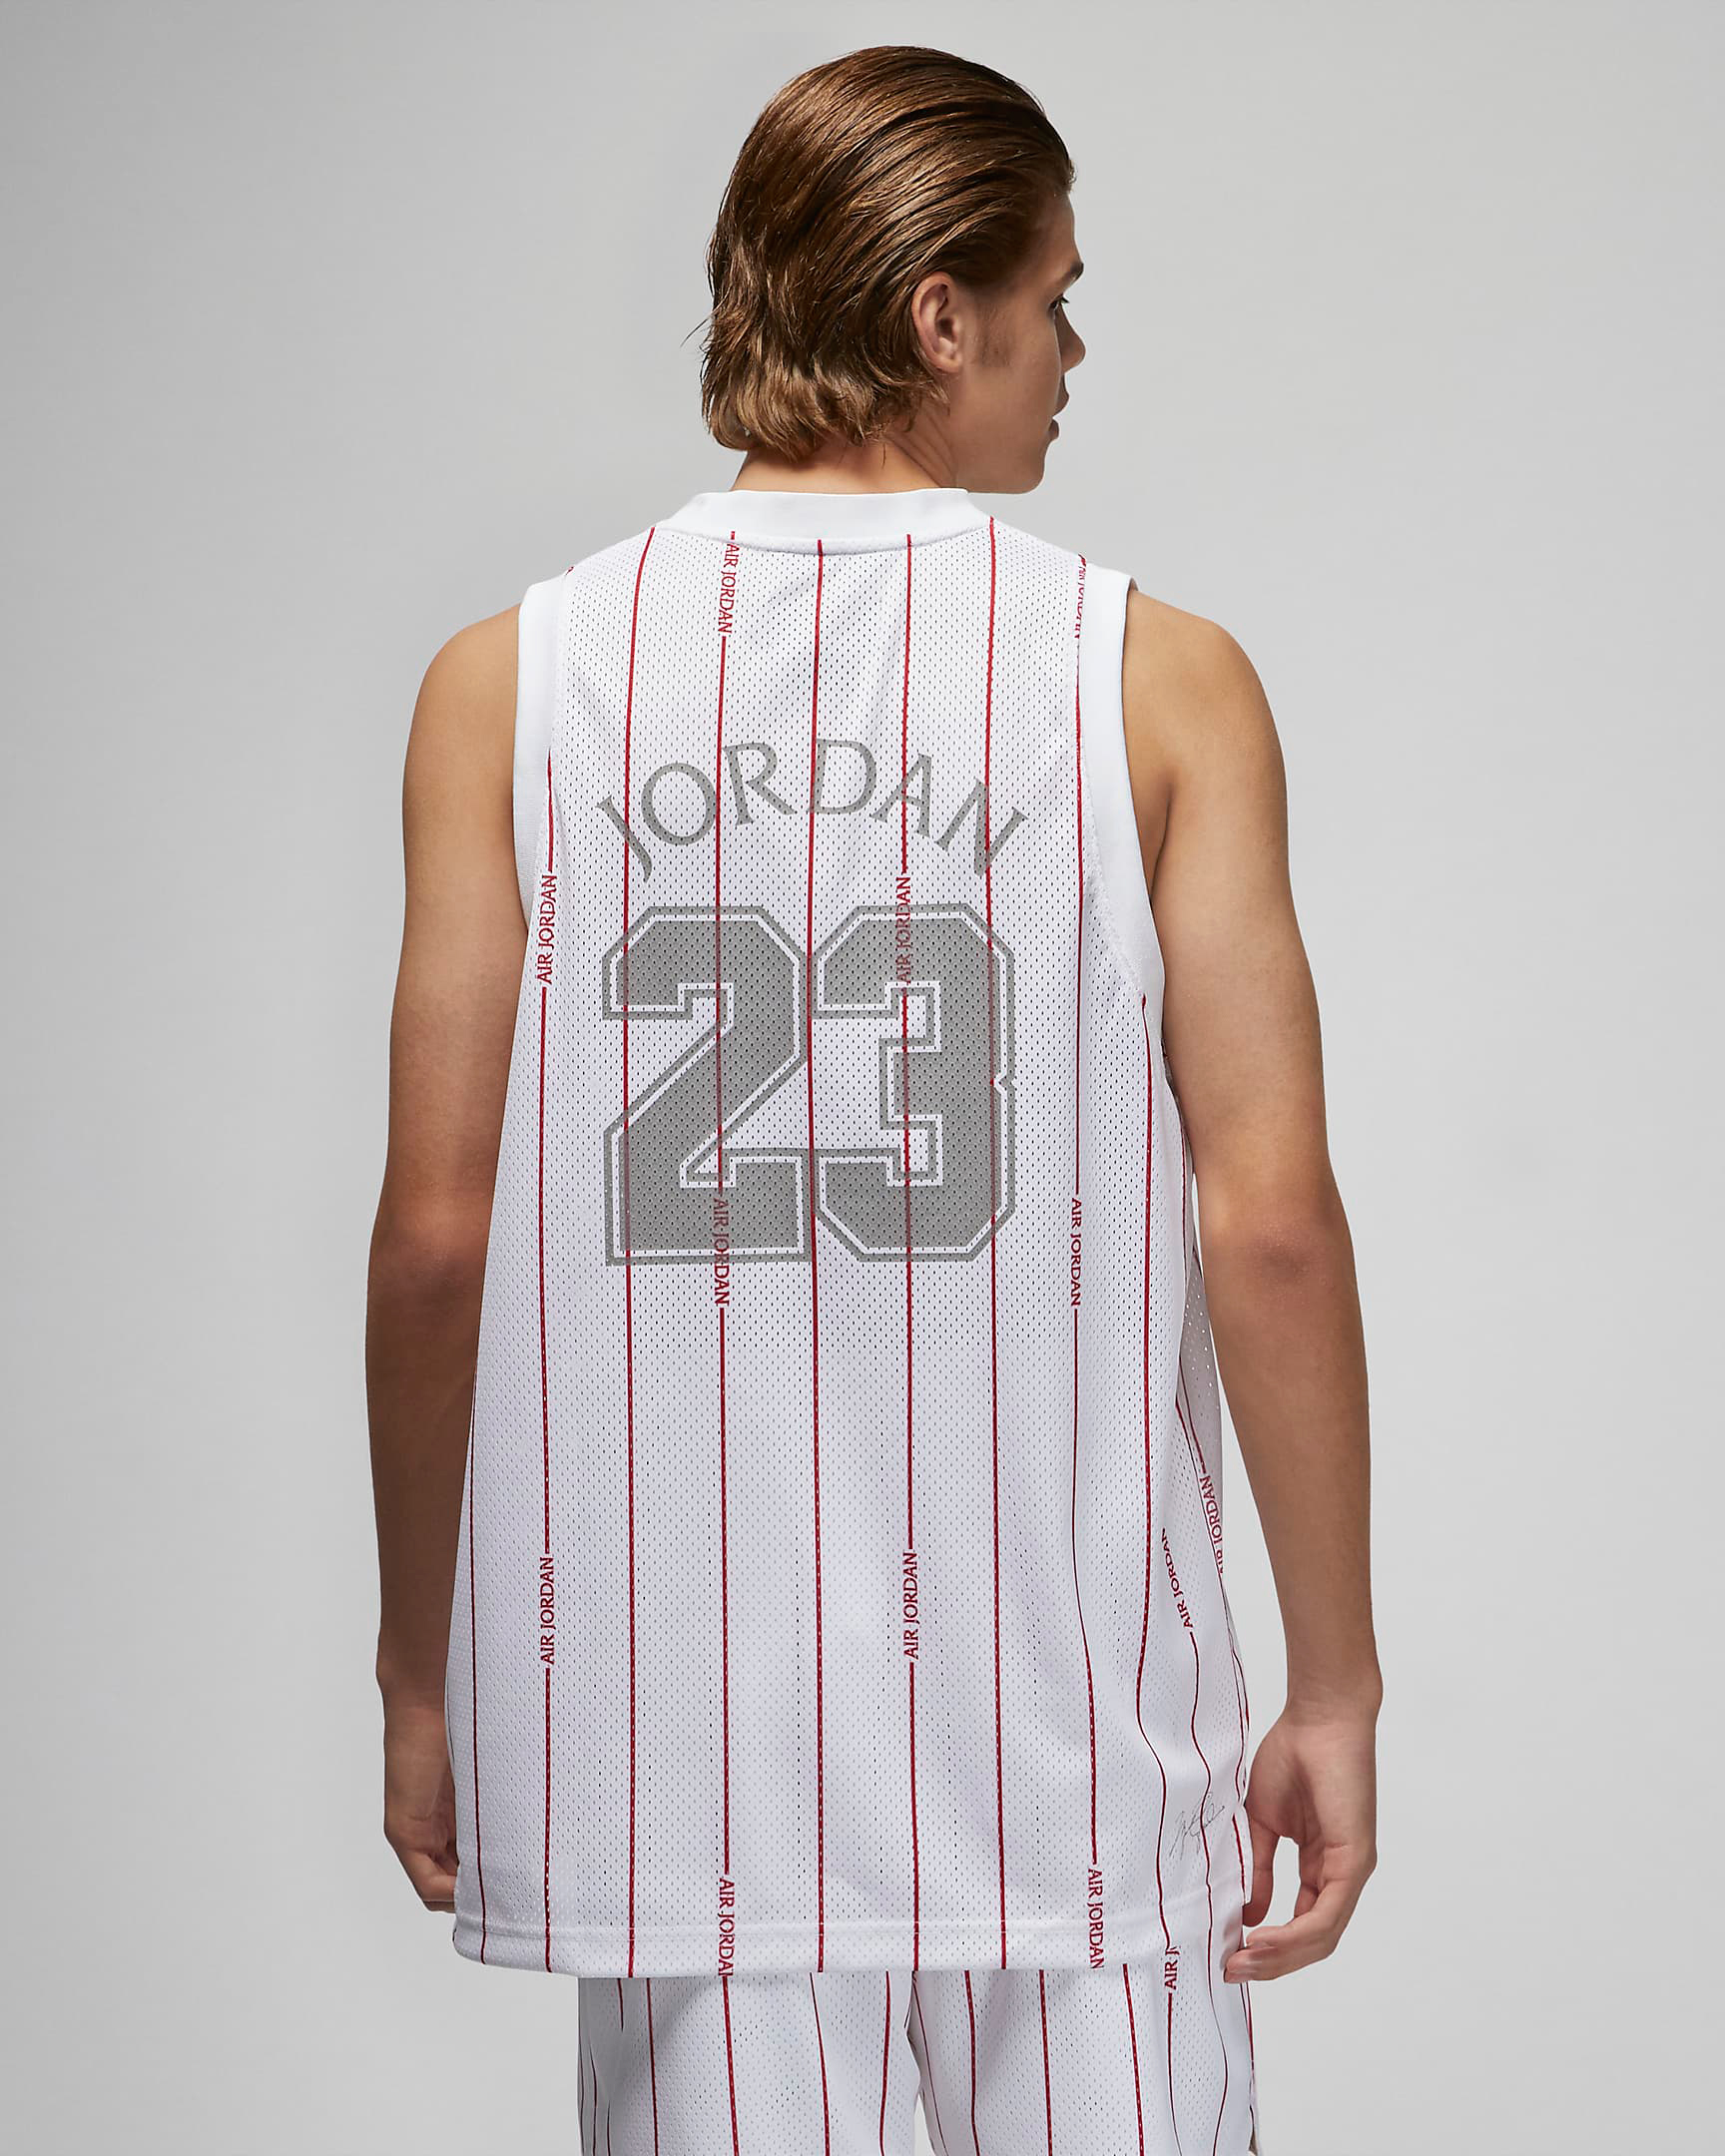 jordan-essentials-printed-striped-jersey-white-gym-red-2